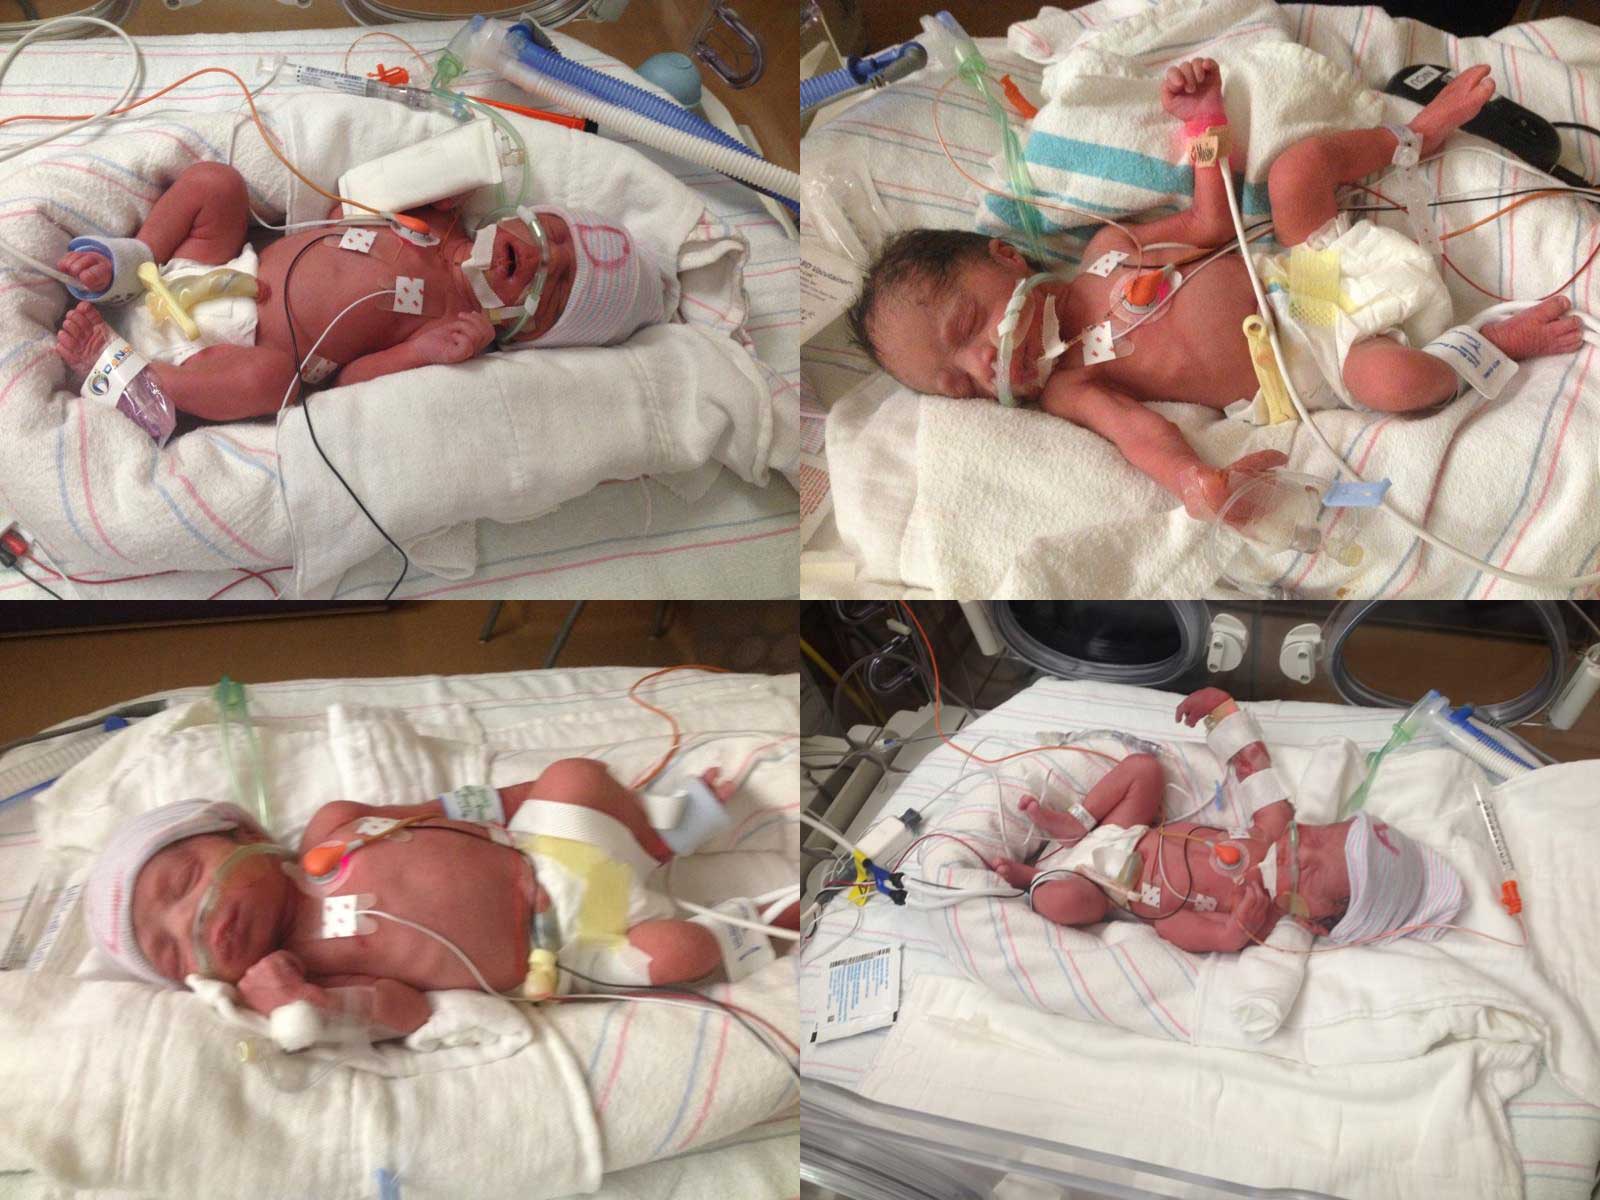 Quadruplets born to Erica Morales at a Phoenix hospital on Jan. 15, 2015 (Nicole Todman—AP)